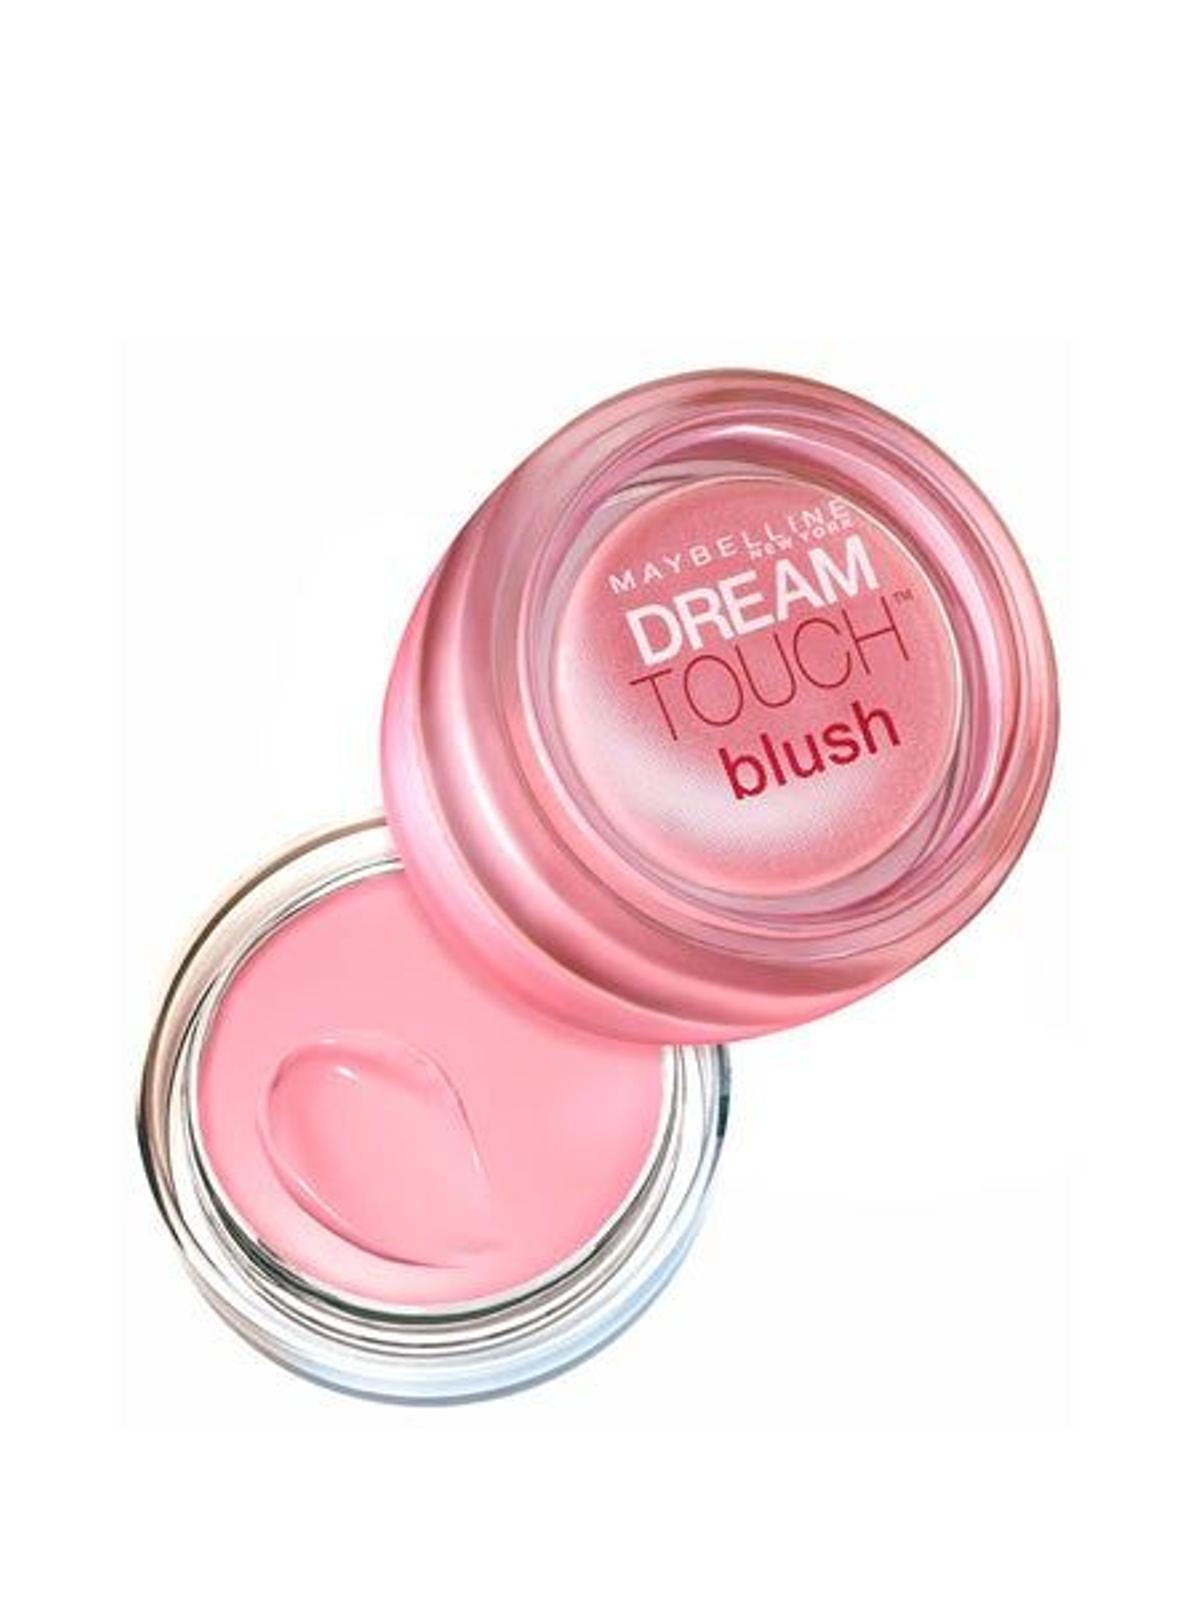 Dream touch blush de Maybelline